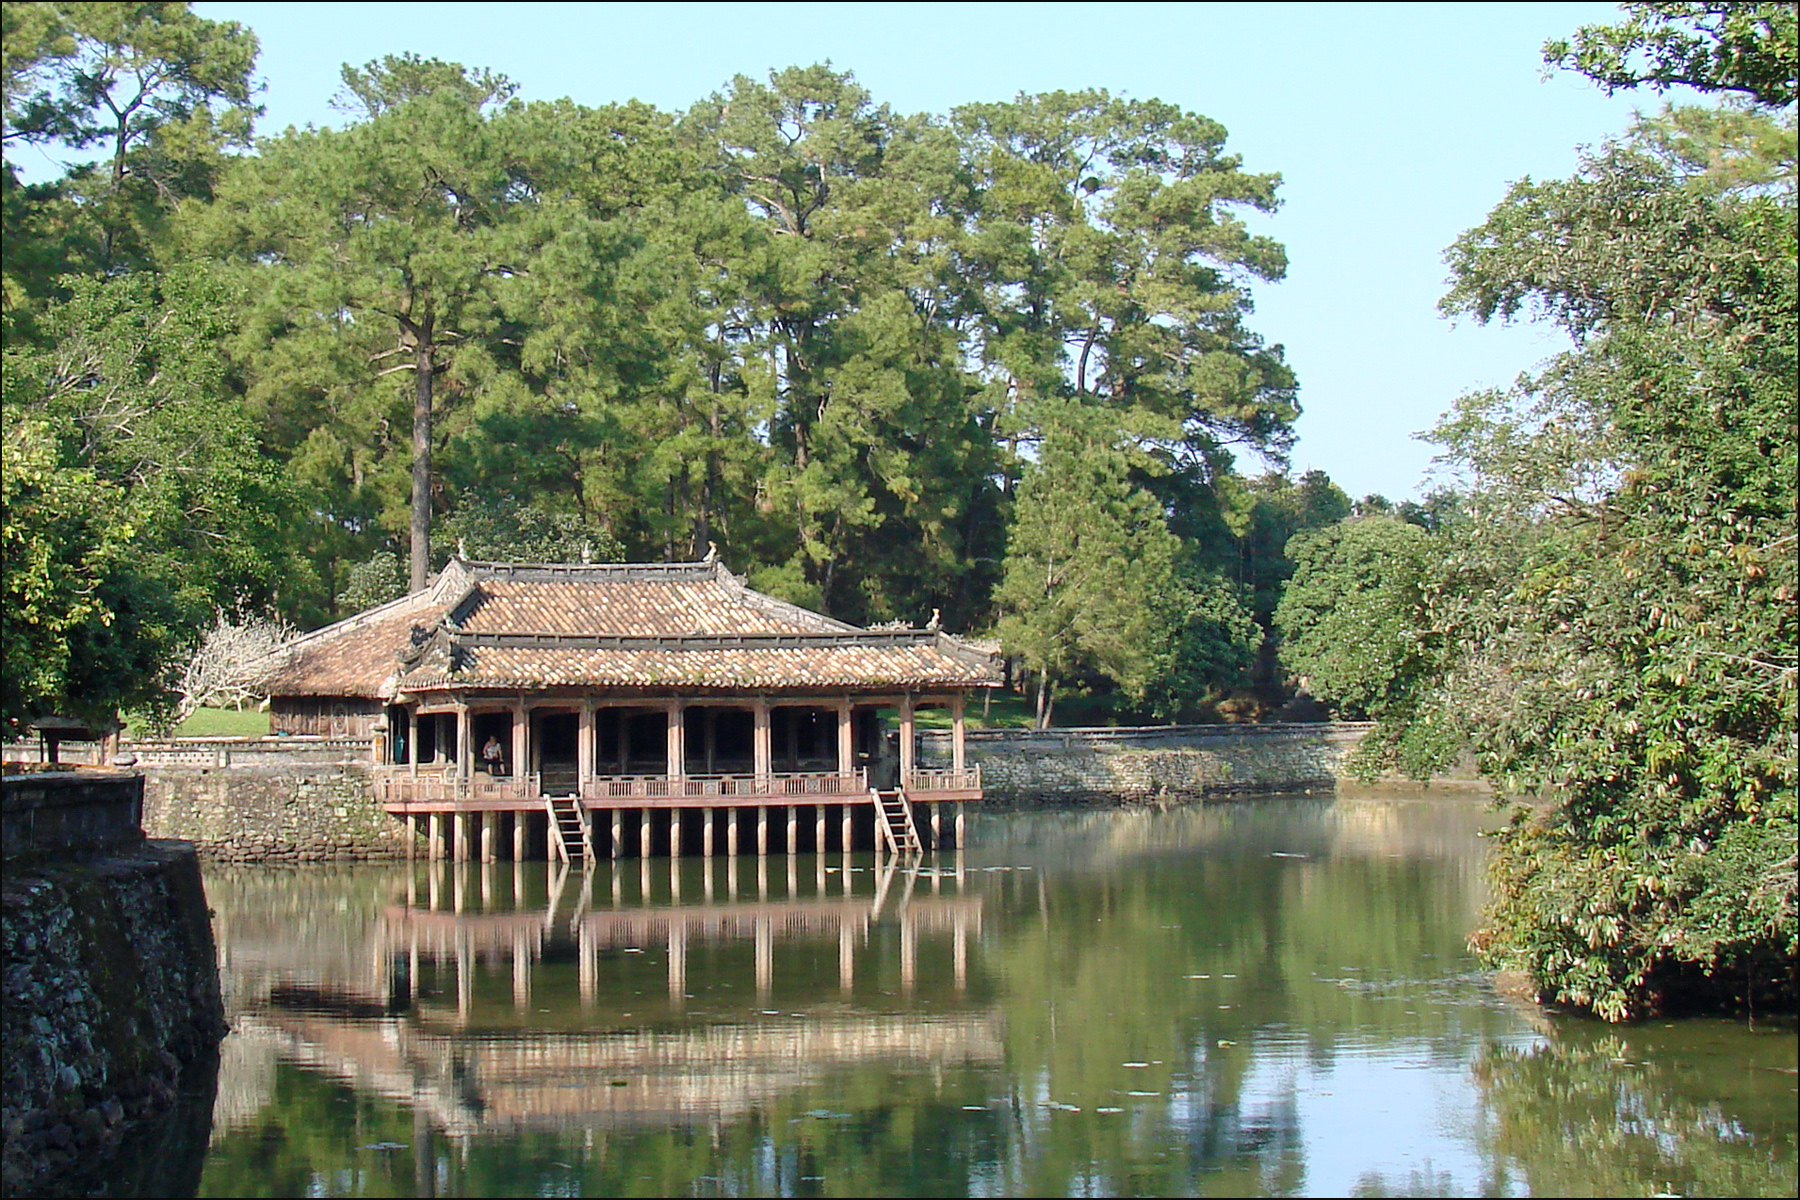 File:Tomb of Emperor Tự Đức 1.jpg - Wikimedia Commons